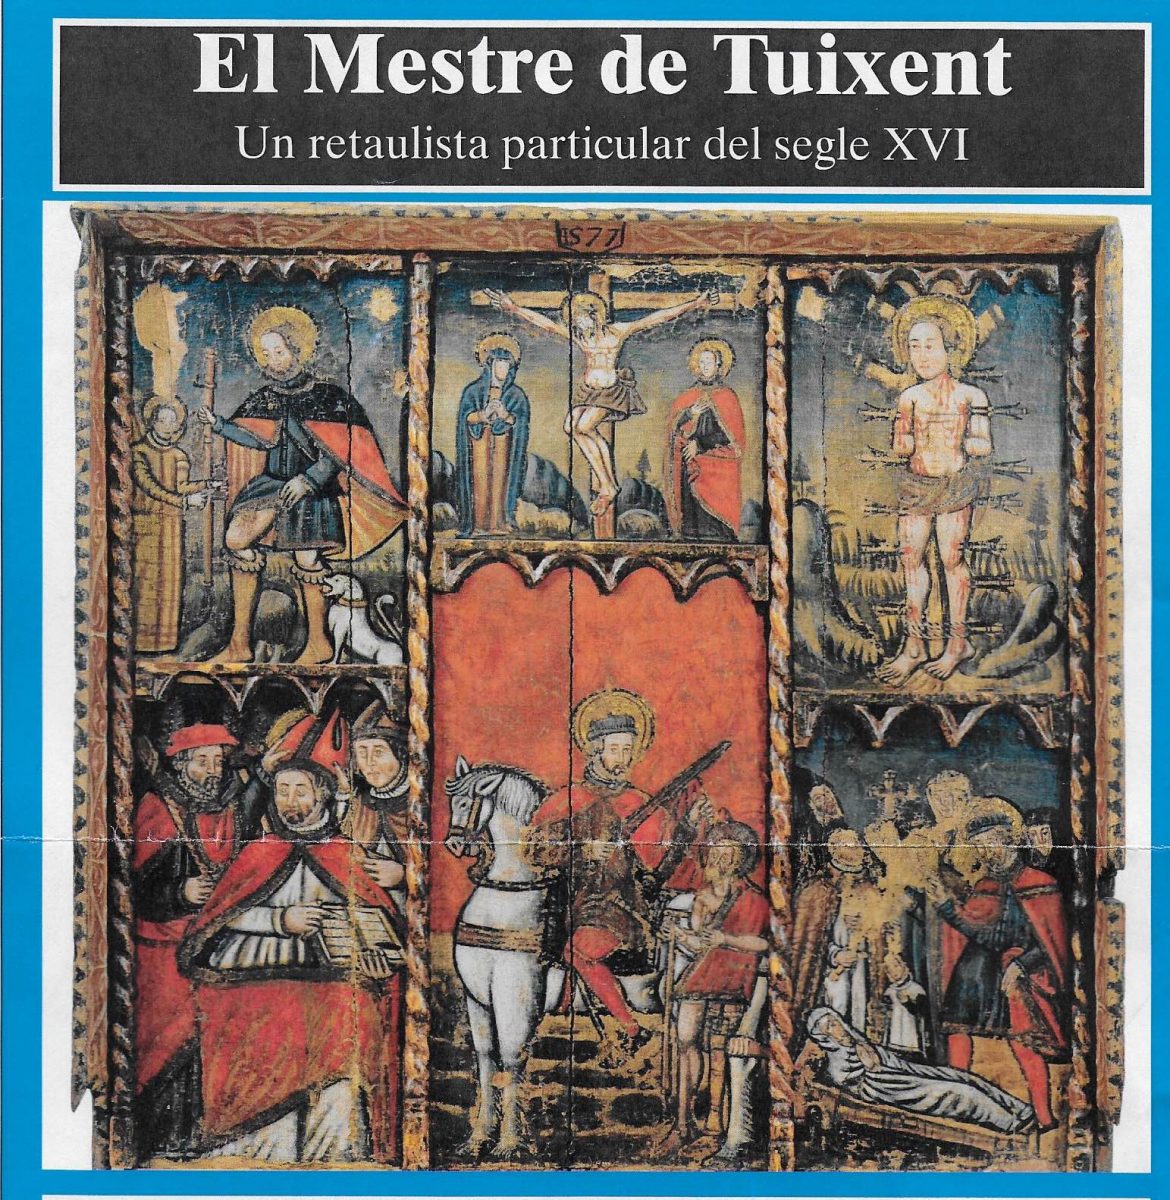 El Mestre de Tuixent: retaulista del segle XVI